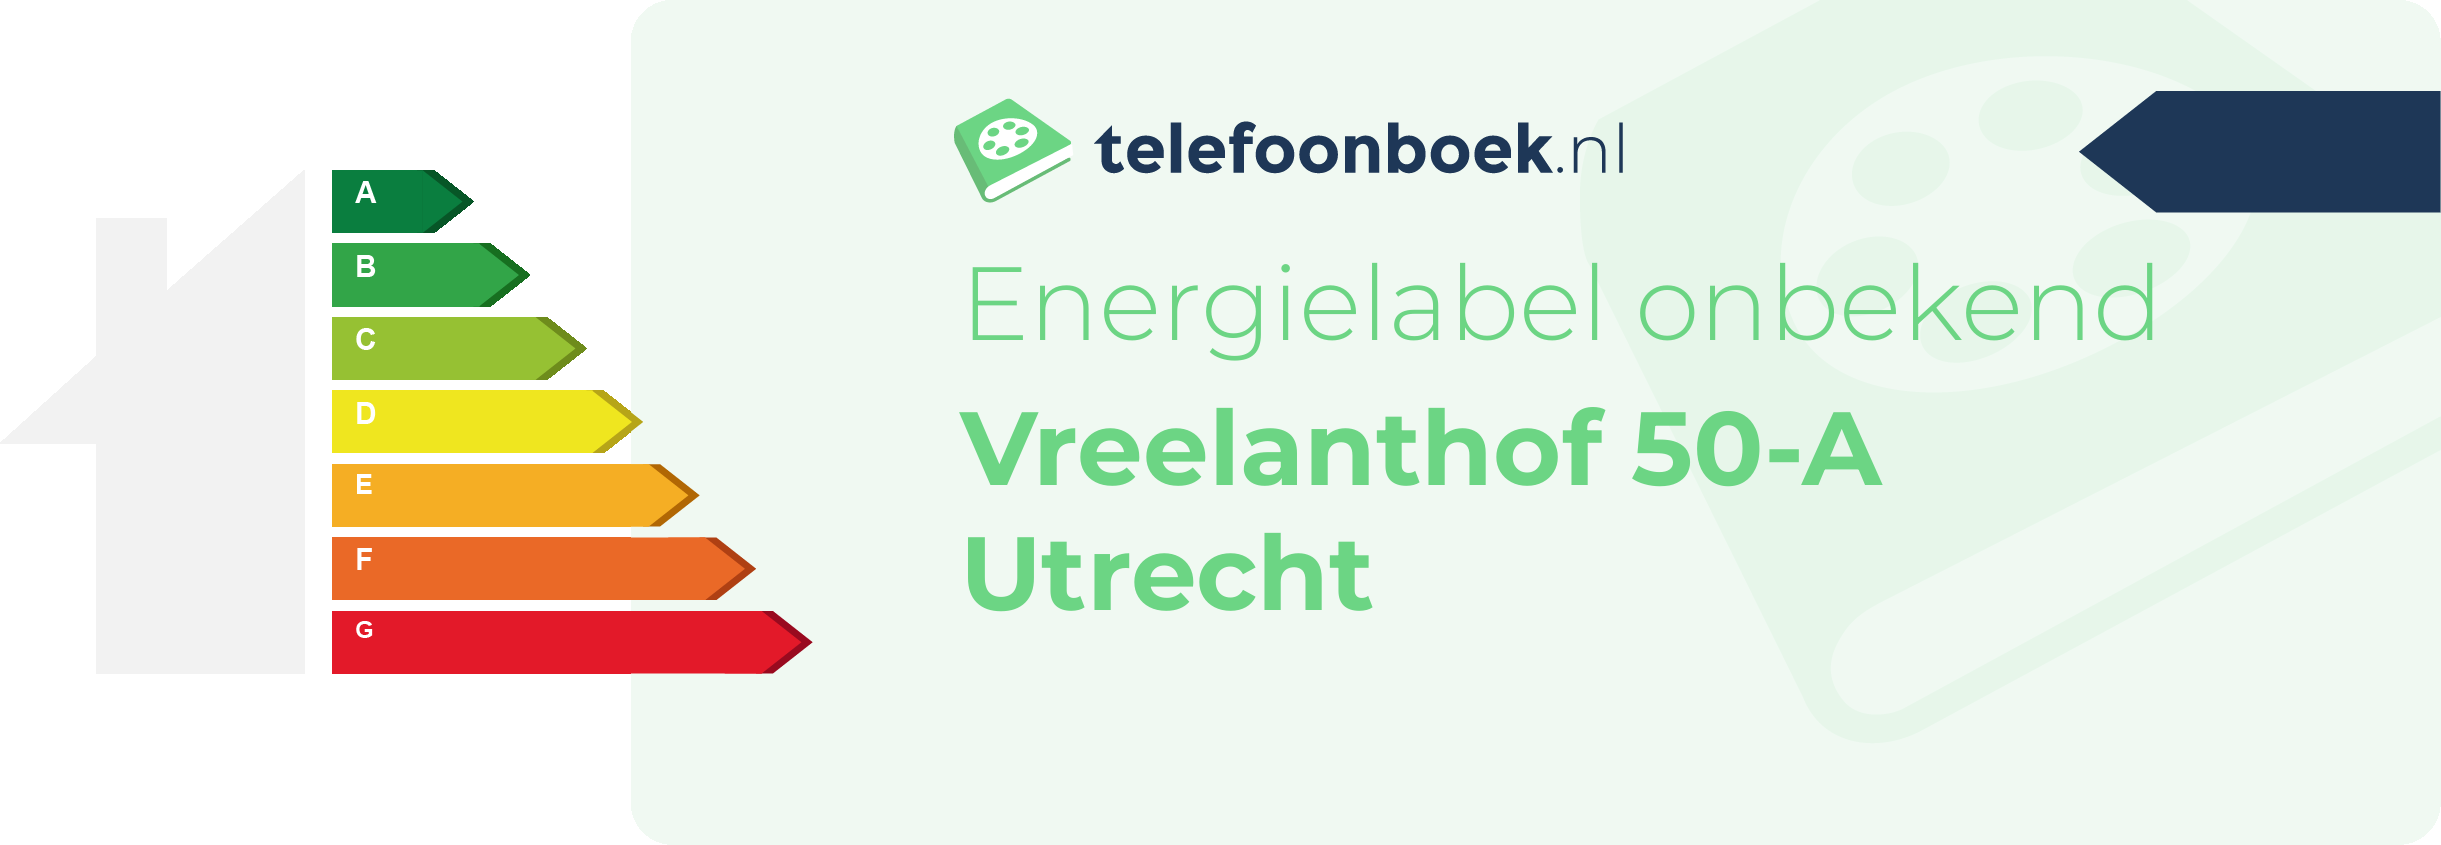 Energielabel Vreelanthof 50-A Utrecht